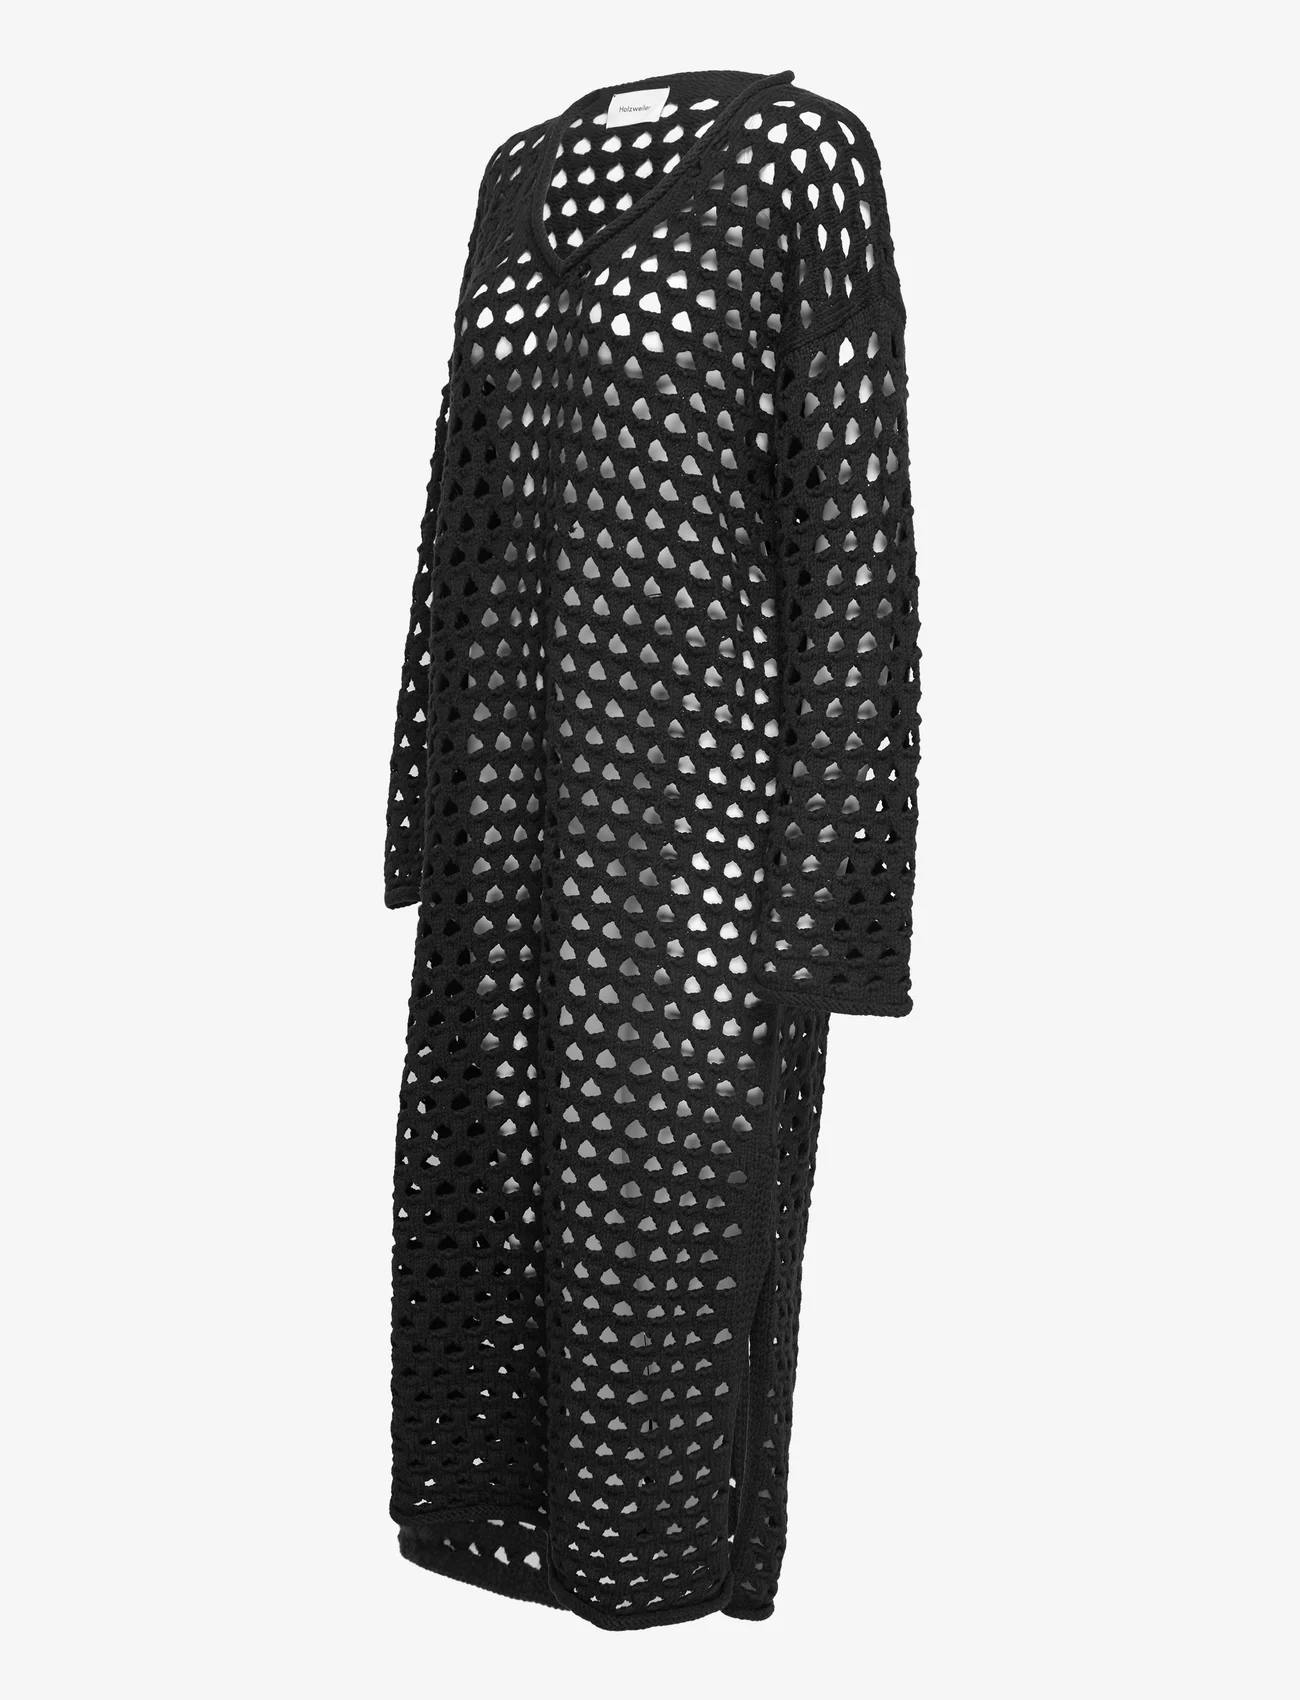 HOLZWEILER - Frida Knit Dress - black - 4